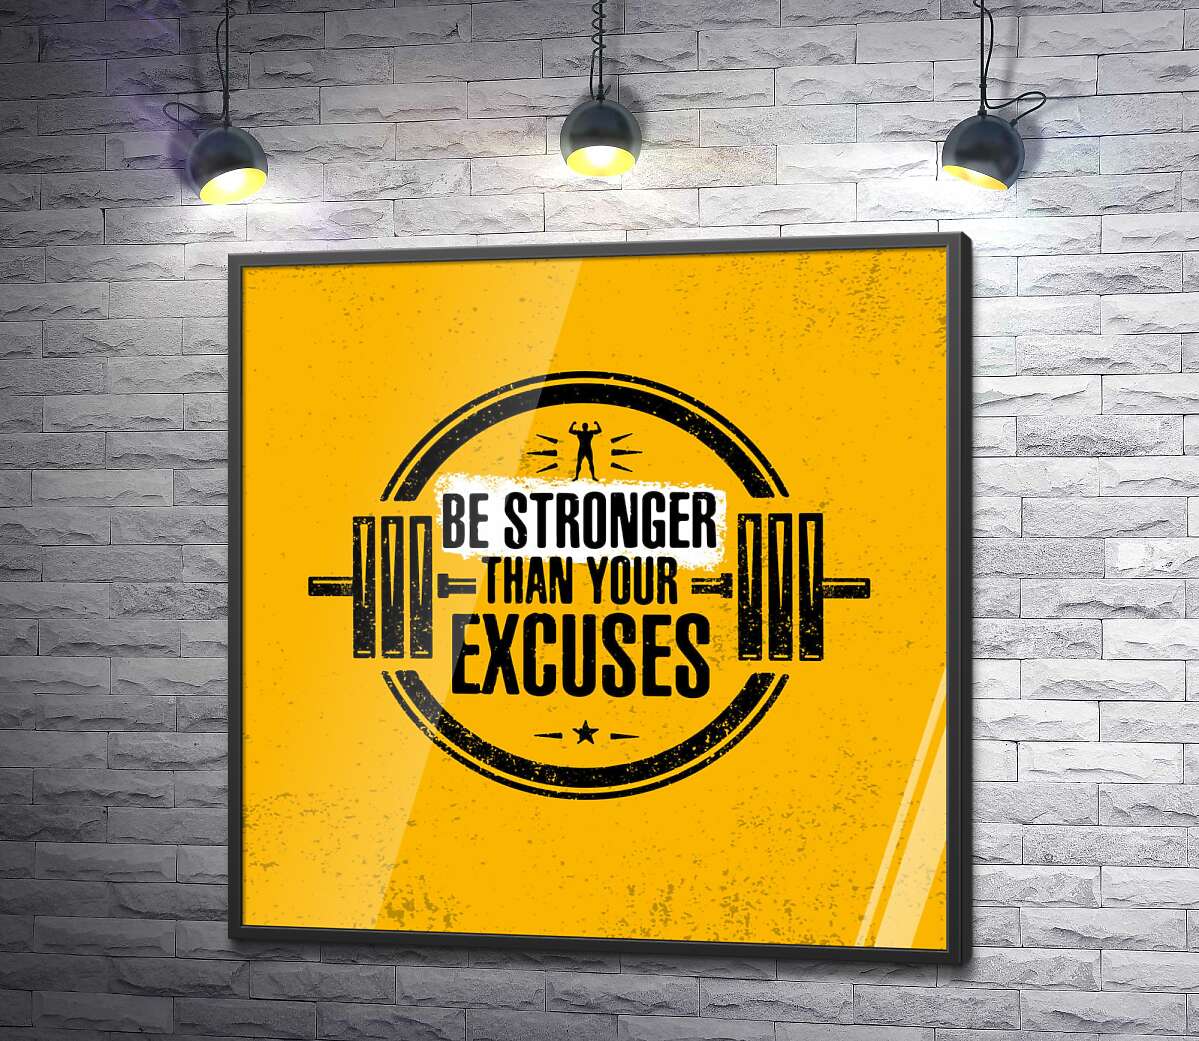 постер Силуэт гантели между надписью "be stronger than your excuses"